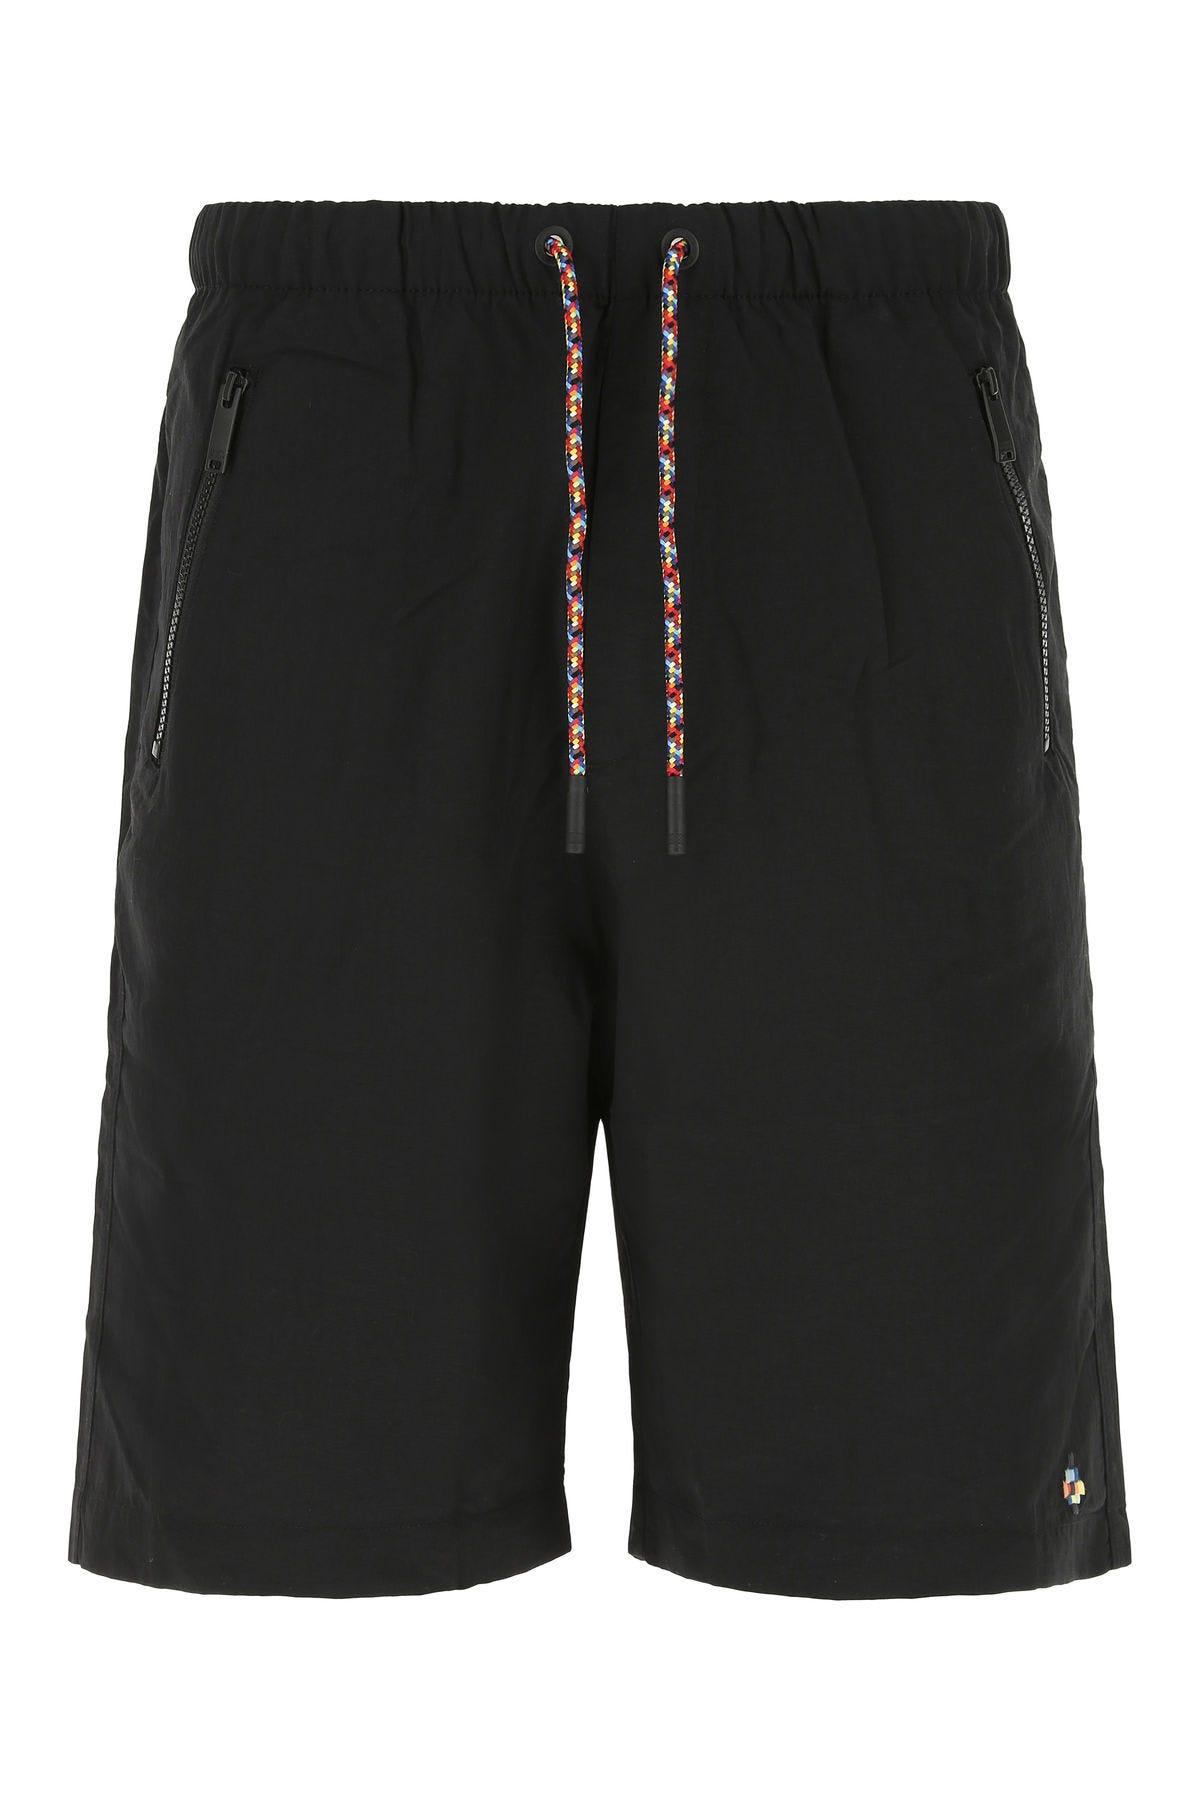 Black Nylon Swimming Shorts